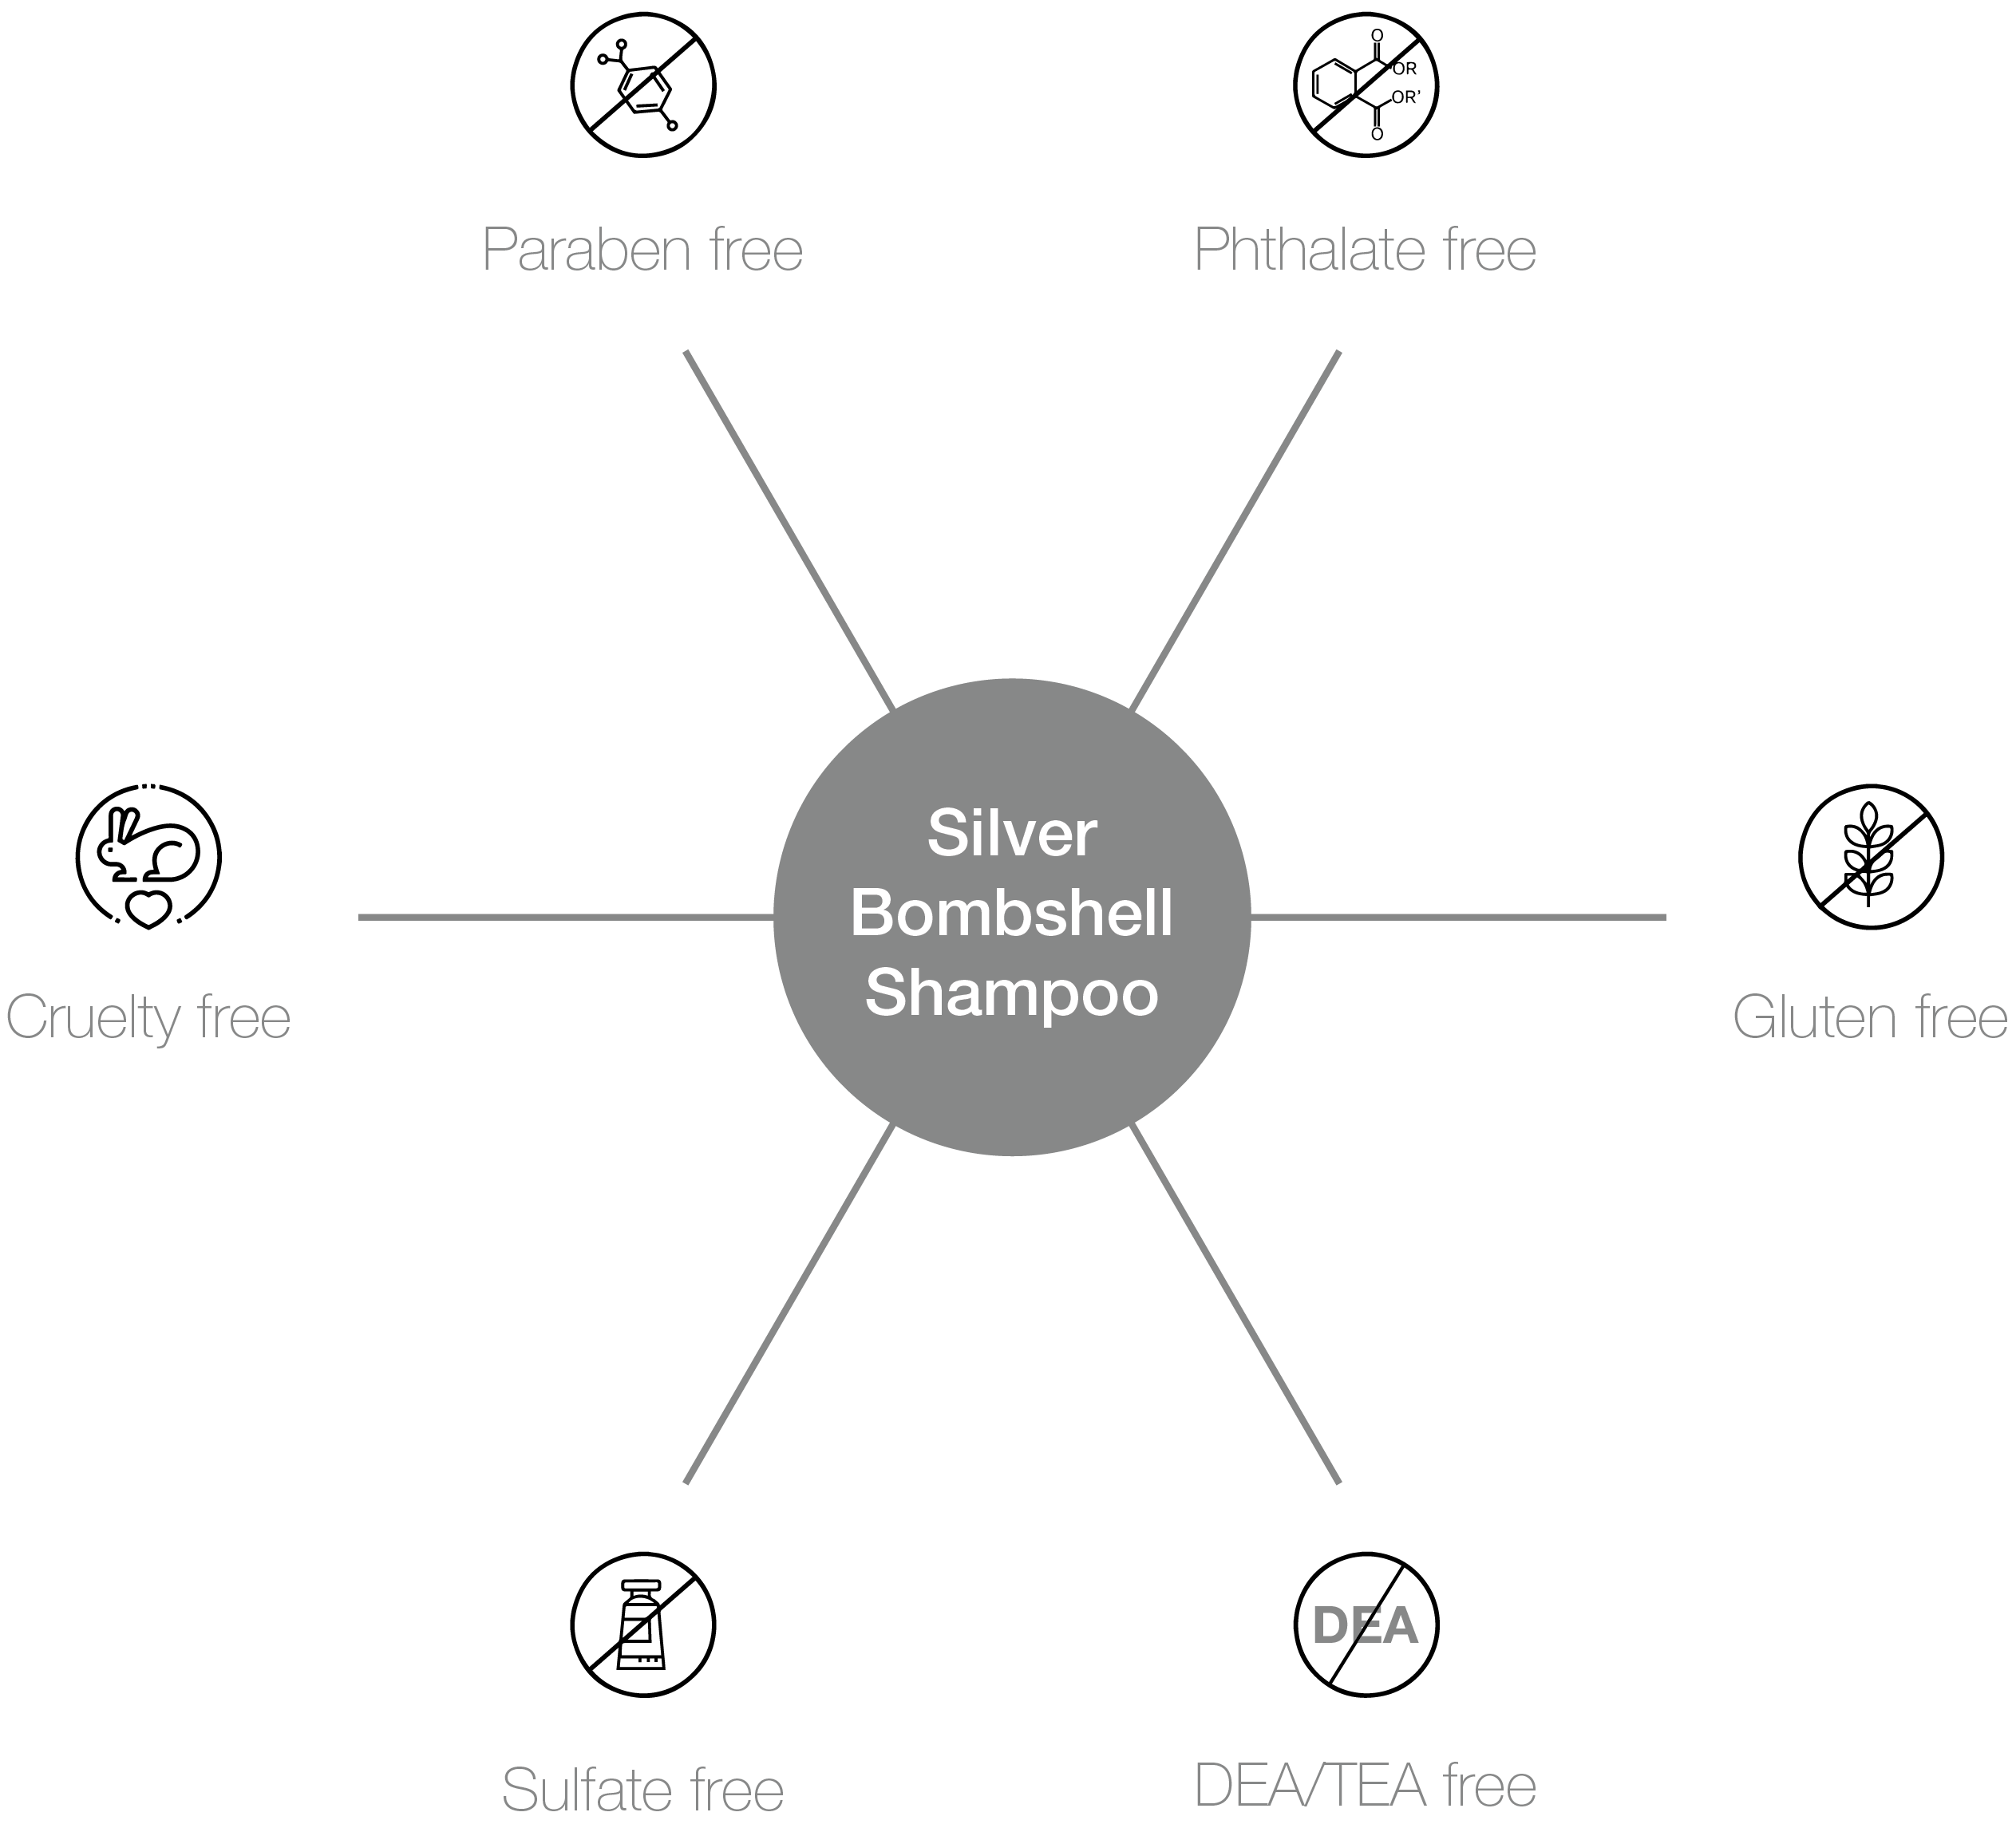 Silver Bombshell Shampoo Pro-benefits